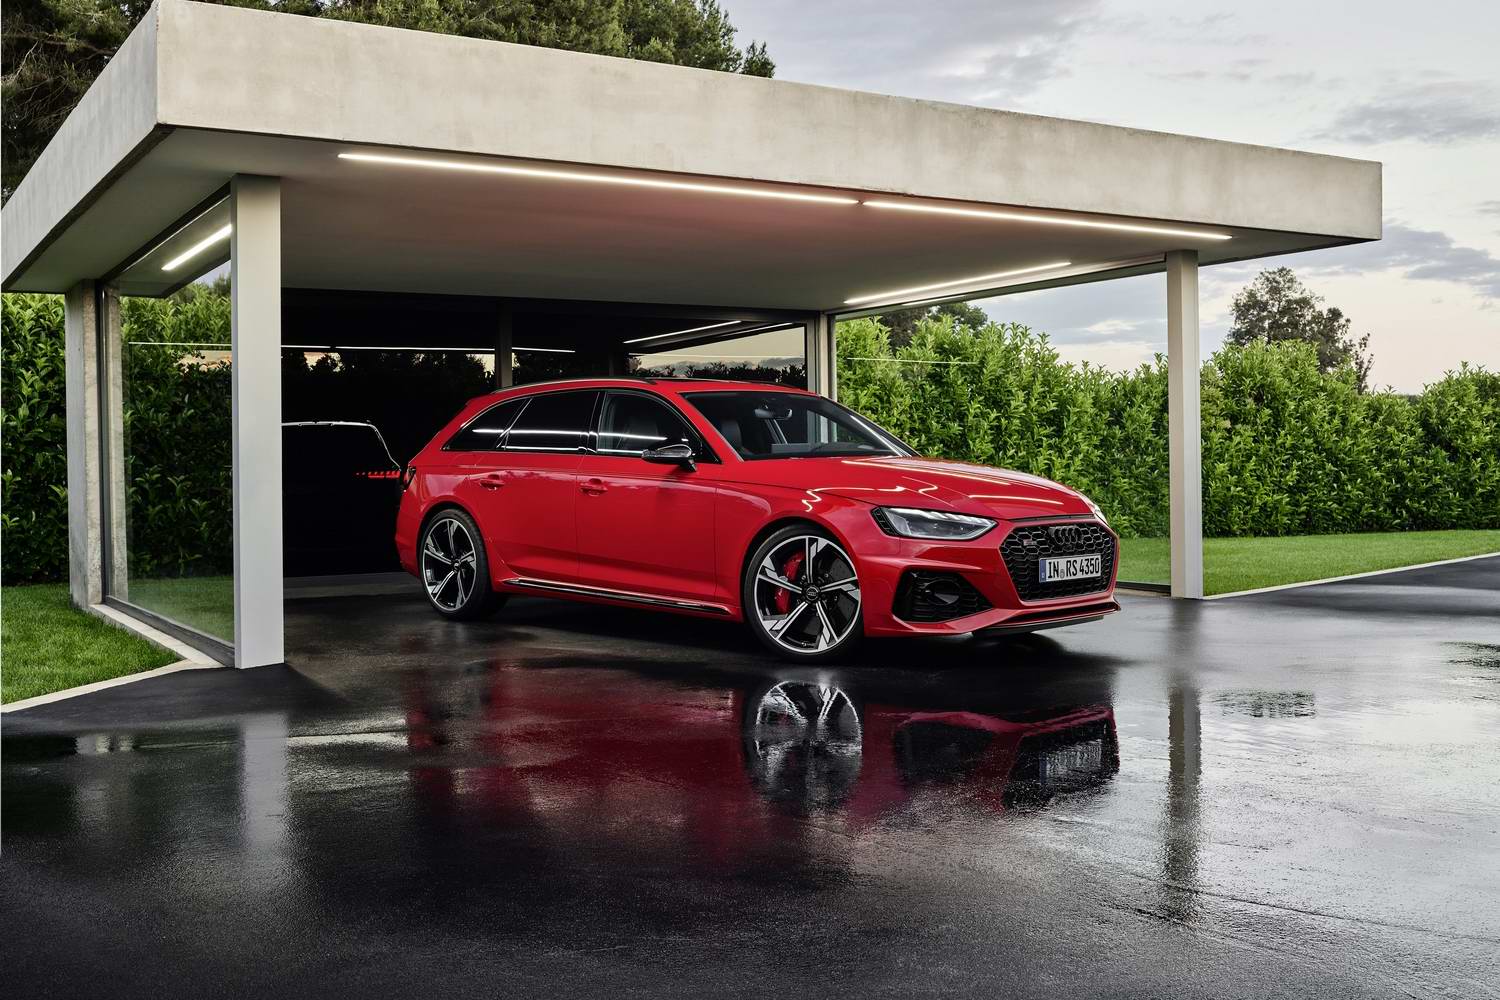 Audi RS 4 Avant (2020)